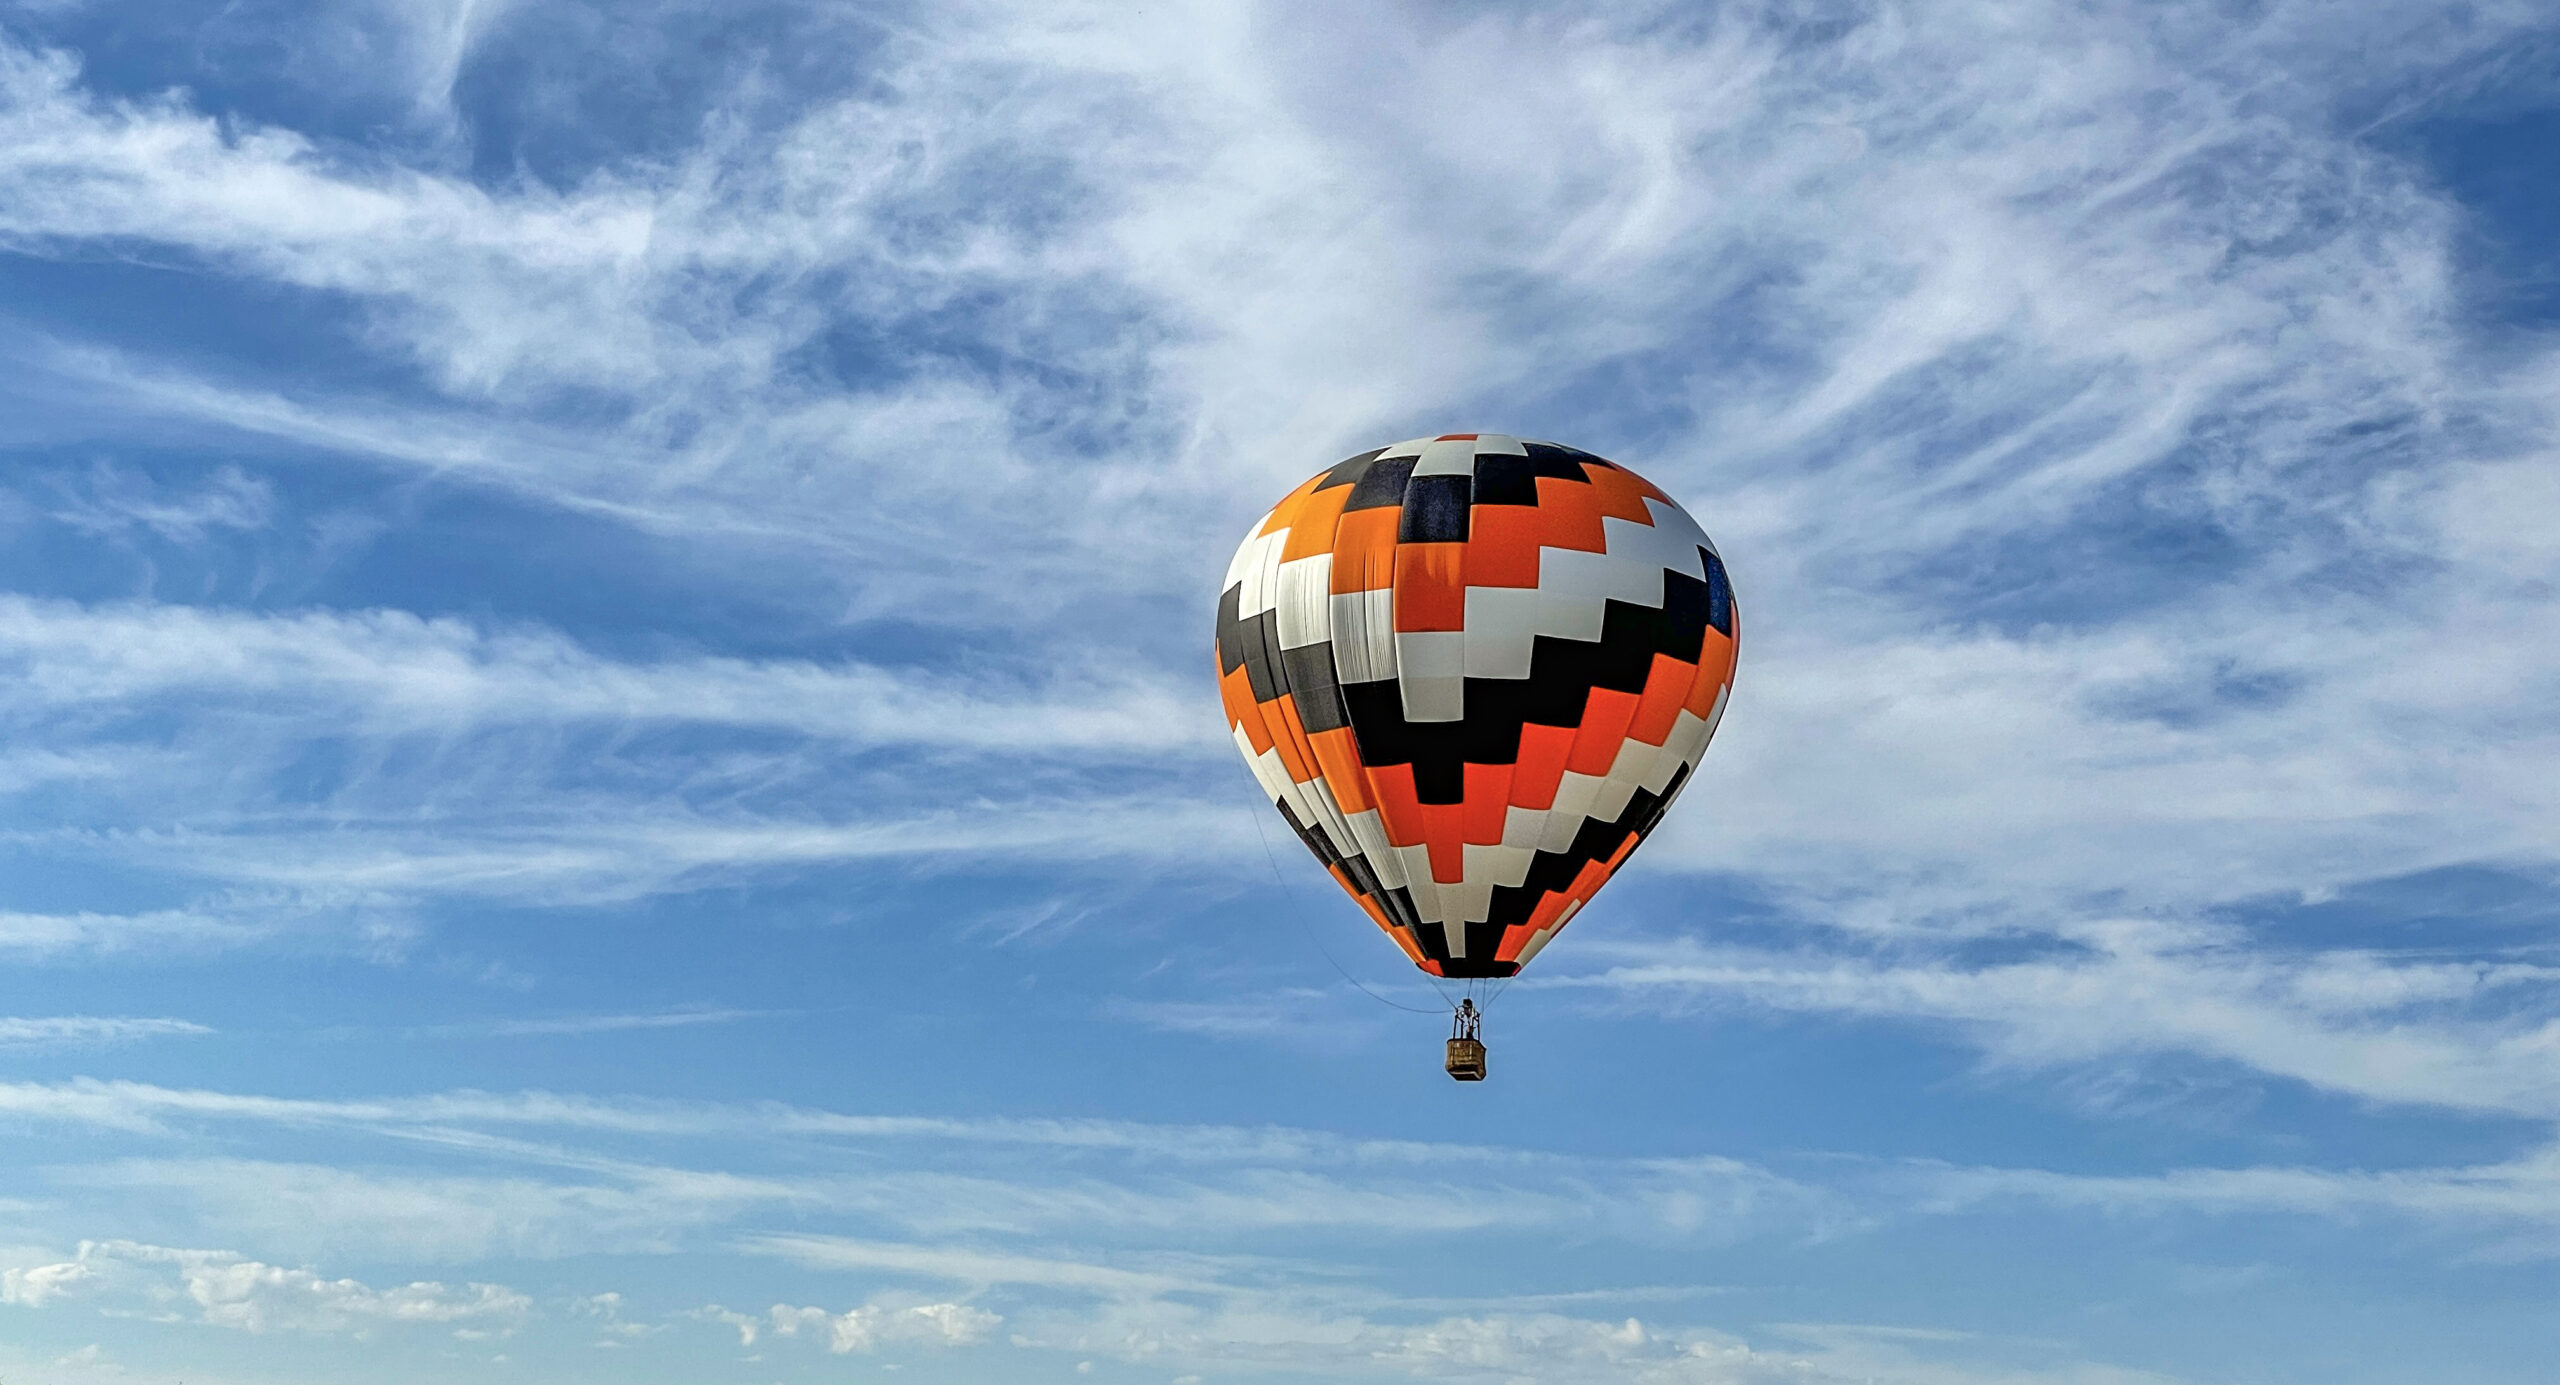 Wadi Rum – Hot Air Balloon Rides